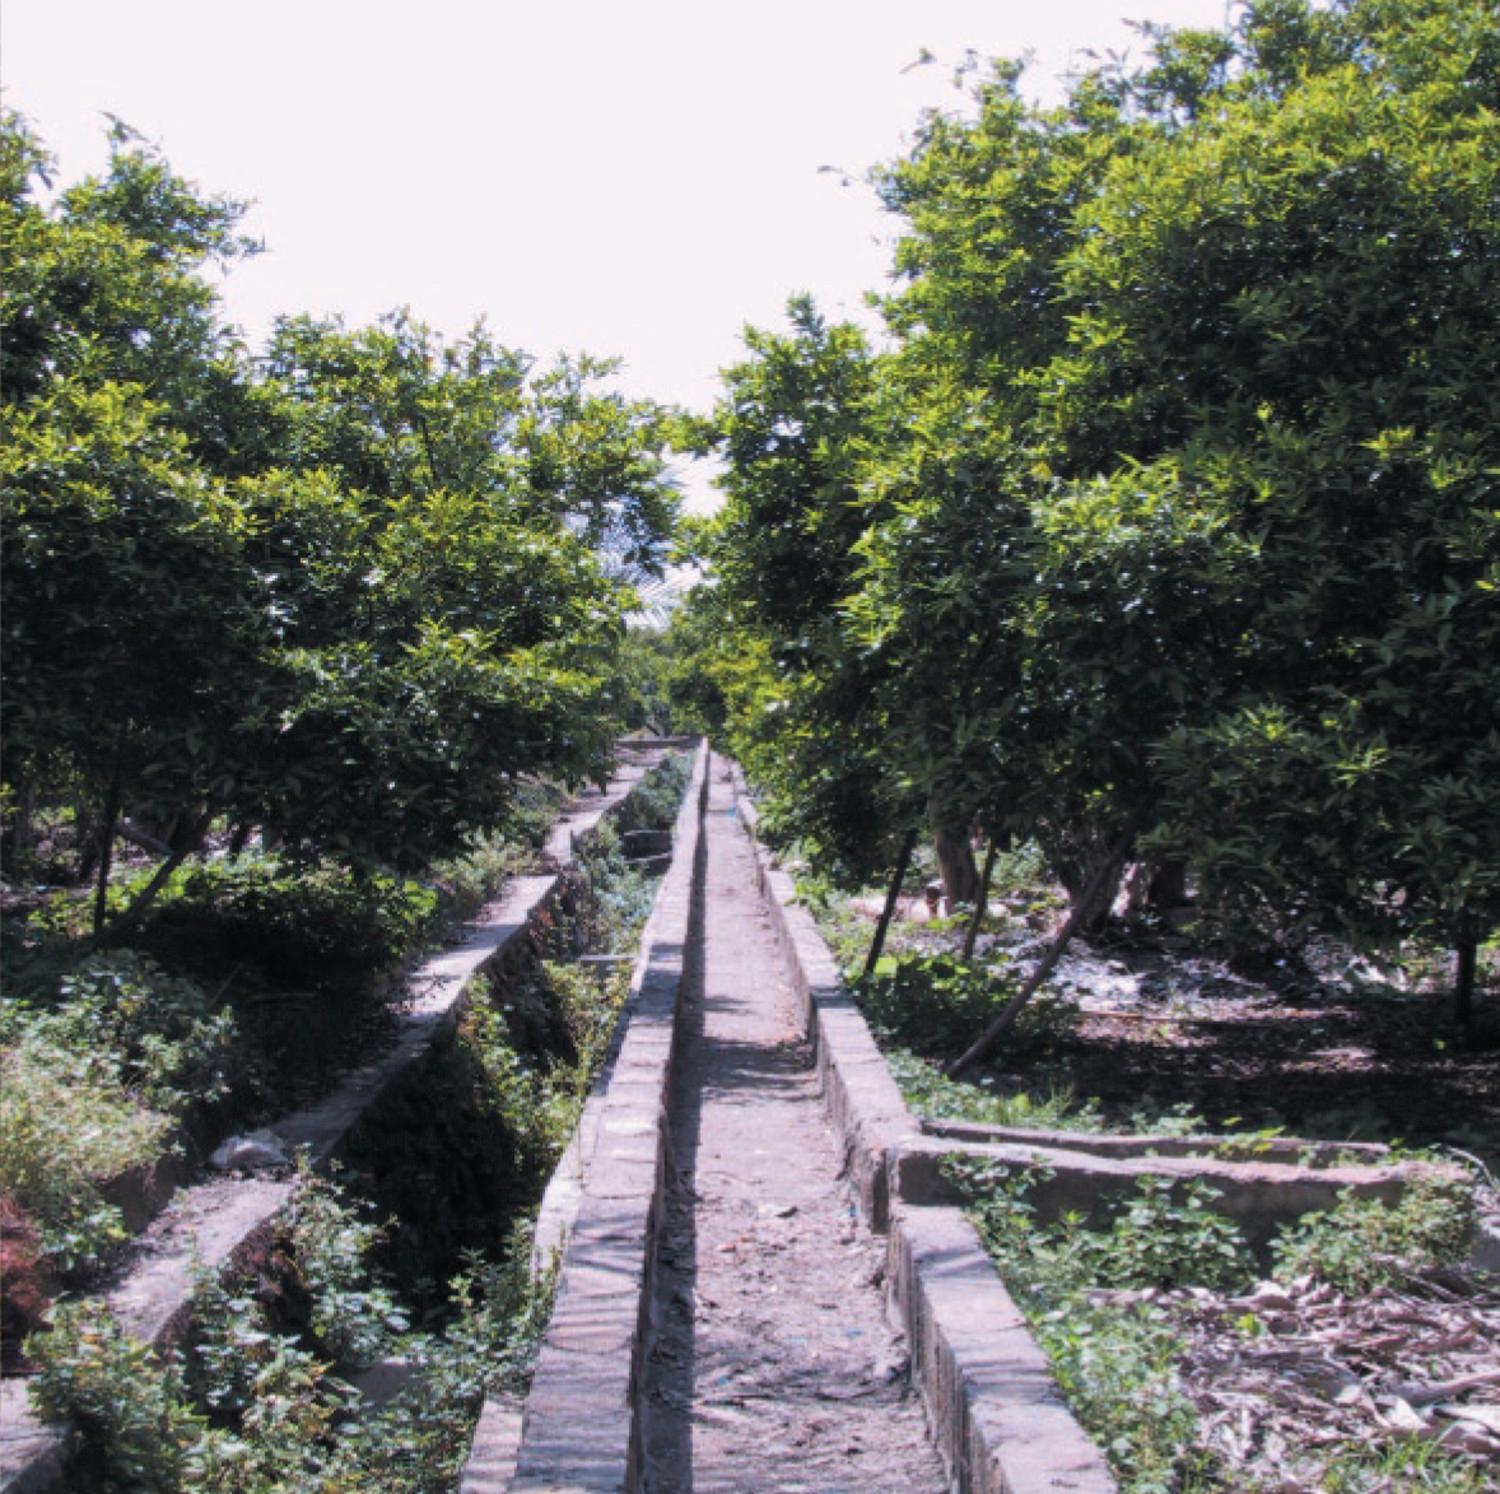 Landscape with irrigation system